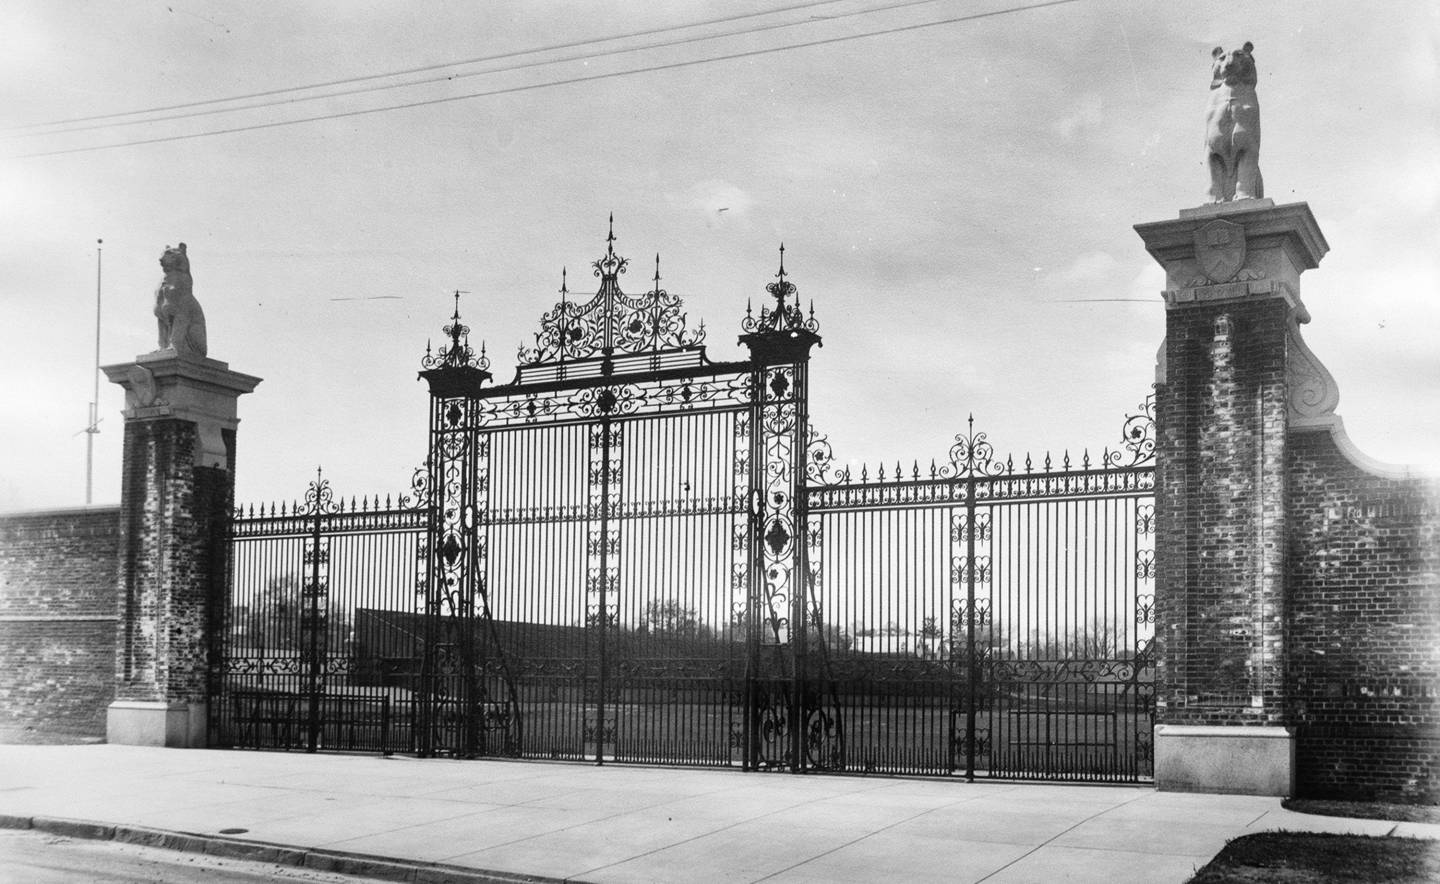 The original Ferris Thompson Gate